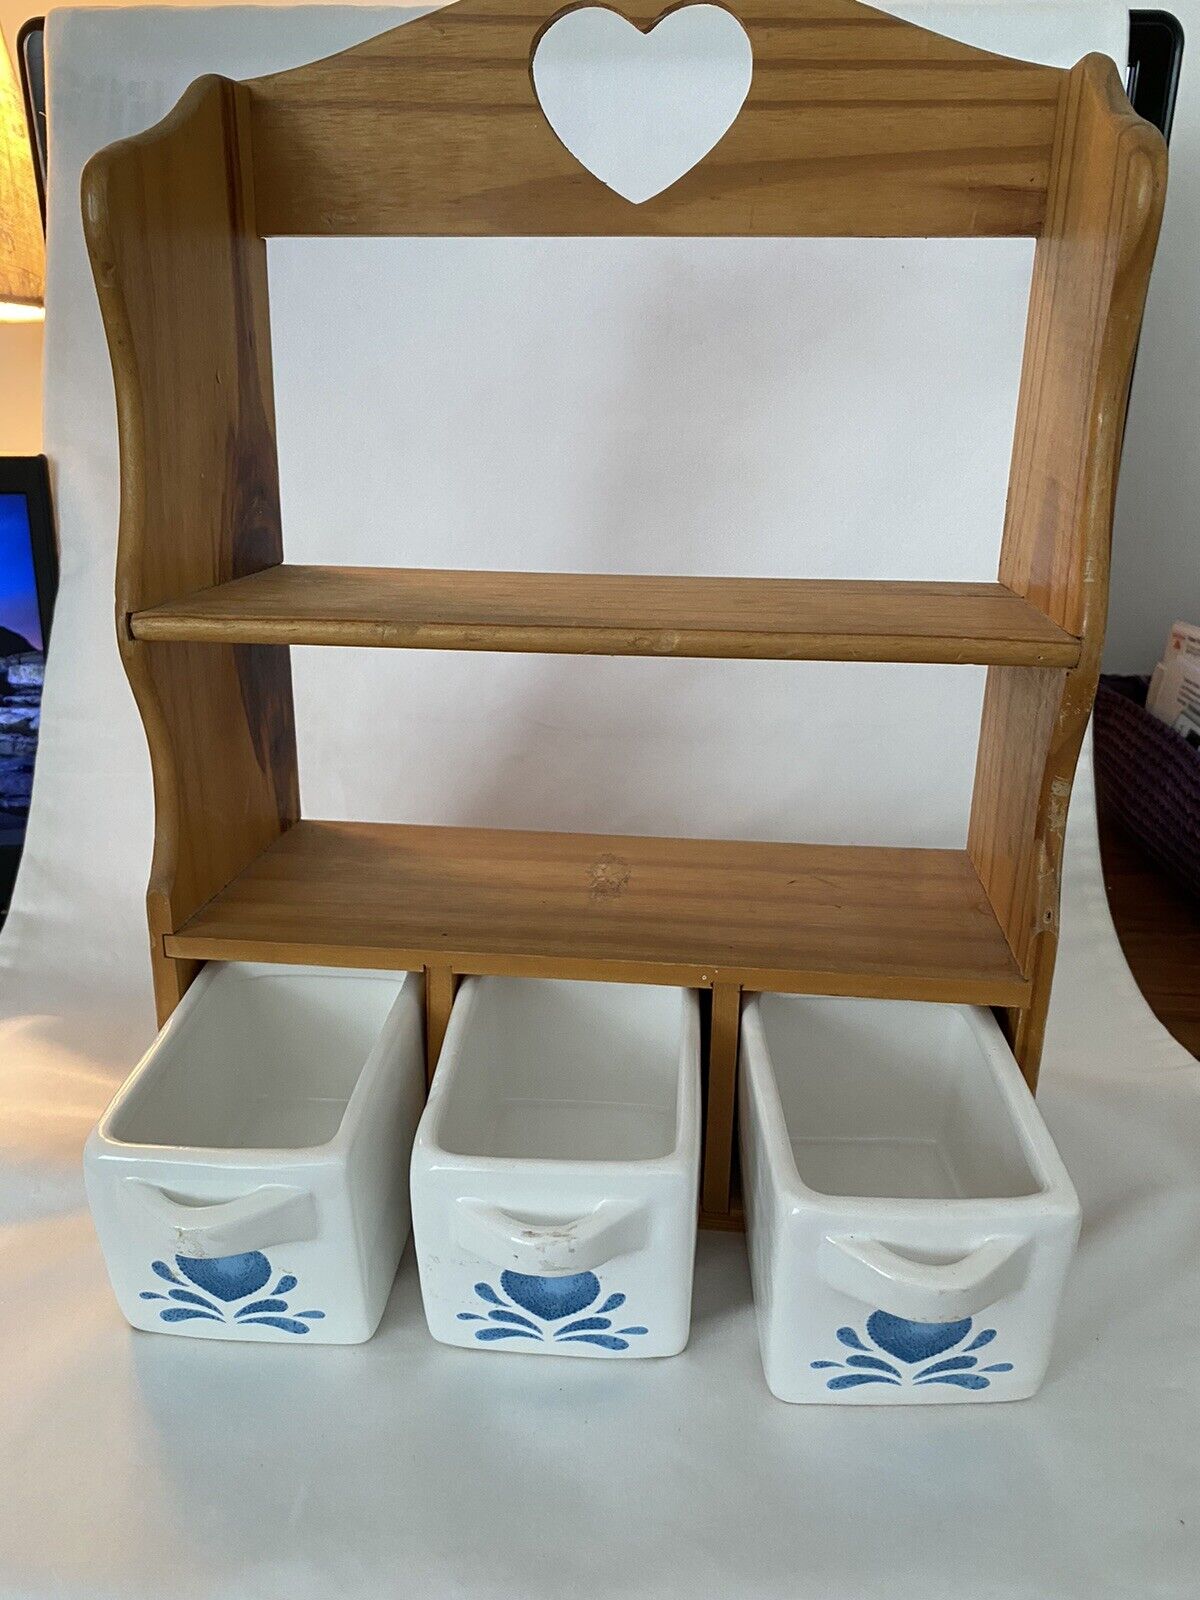 Vtg Wooden Wall Shelf Shadow Box Heart Pattern - 3 Ceramic Drawers